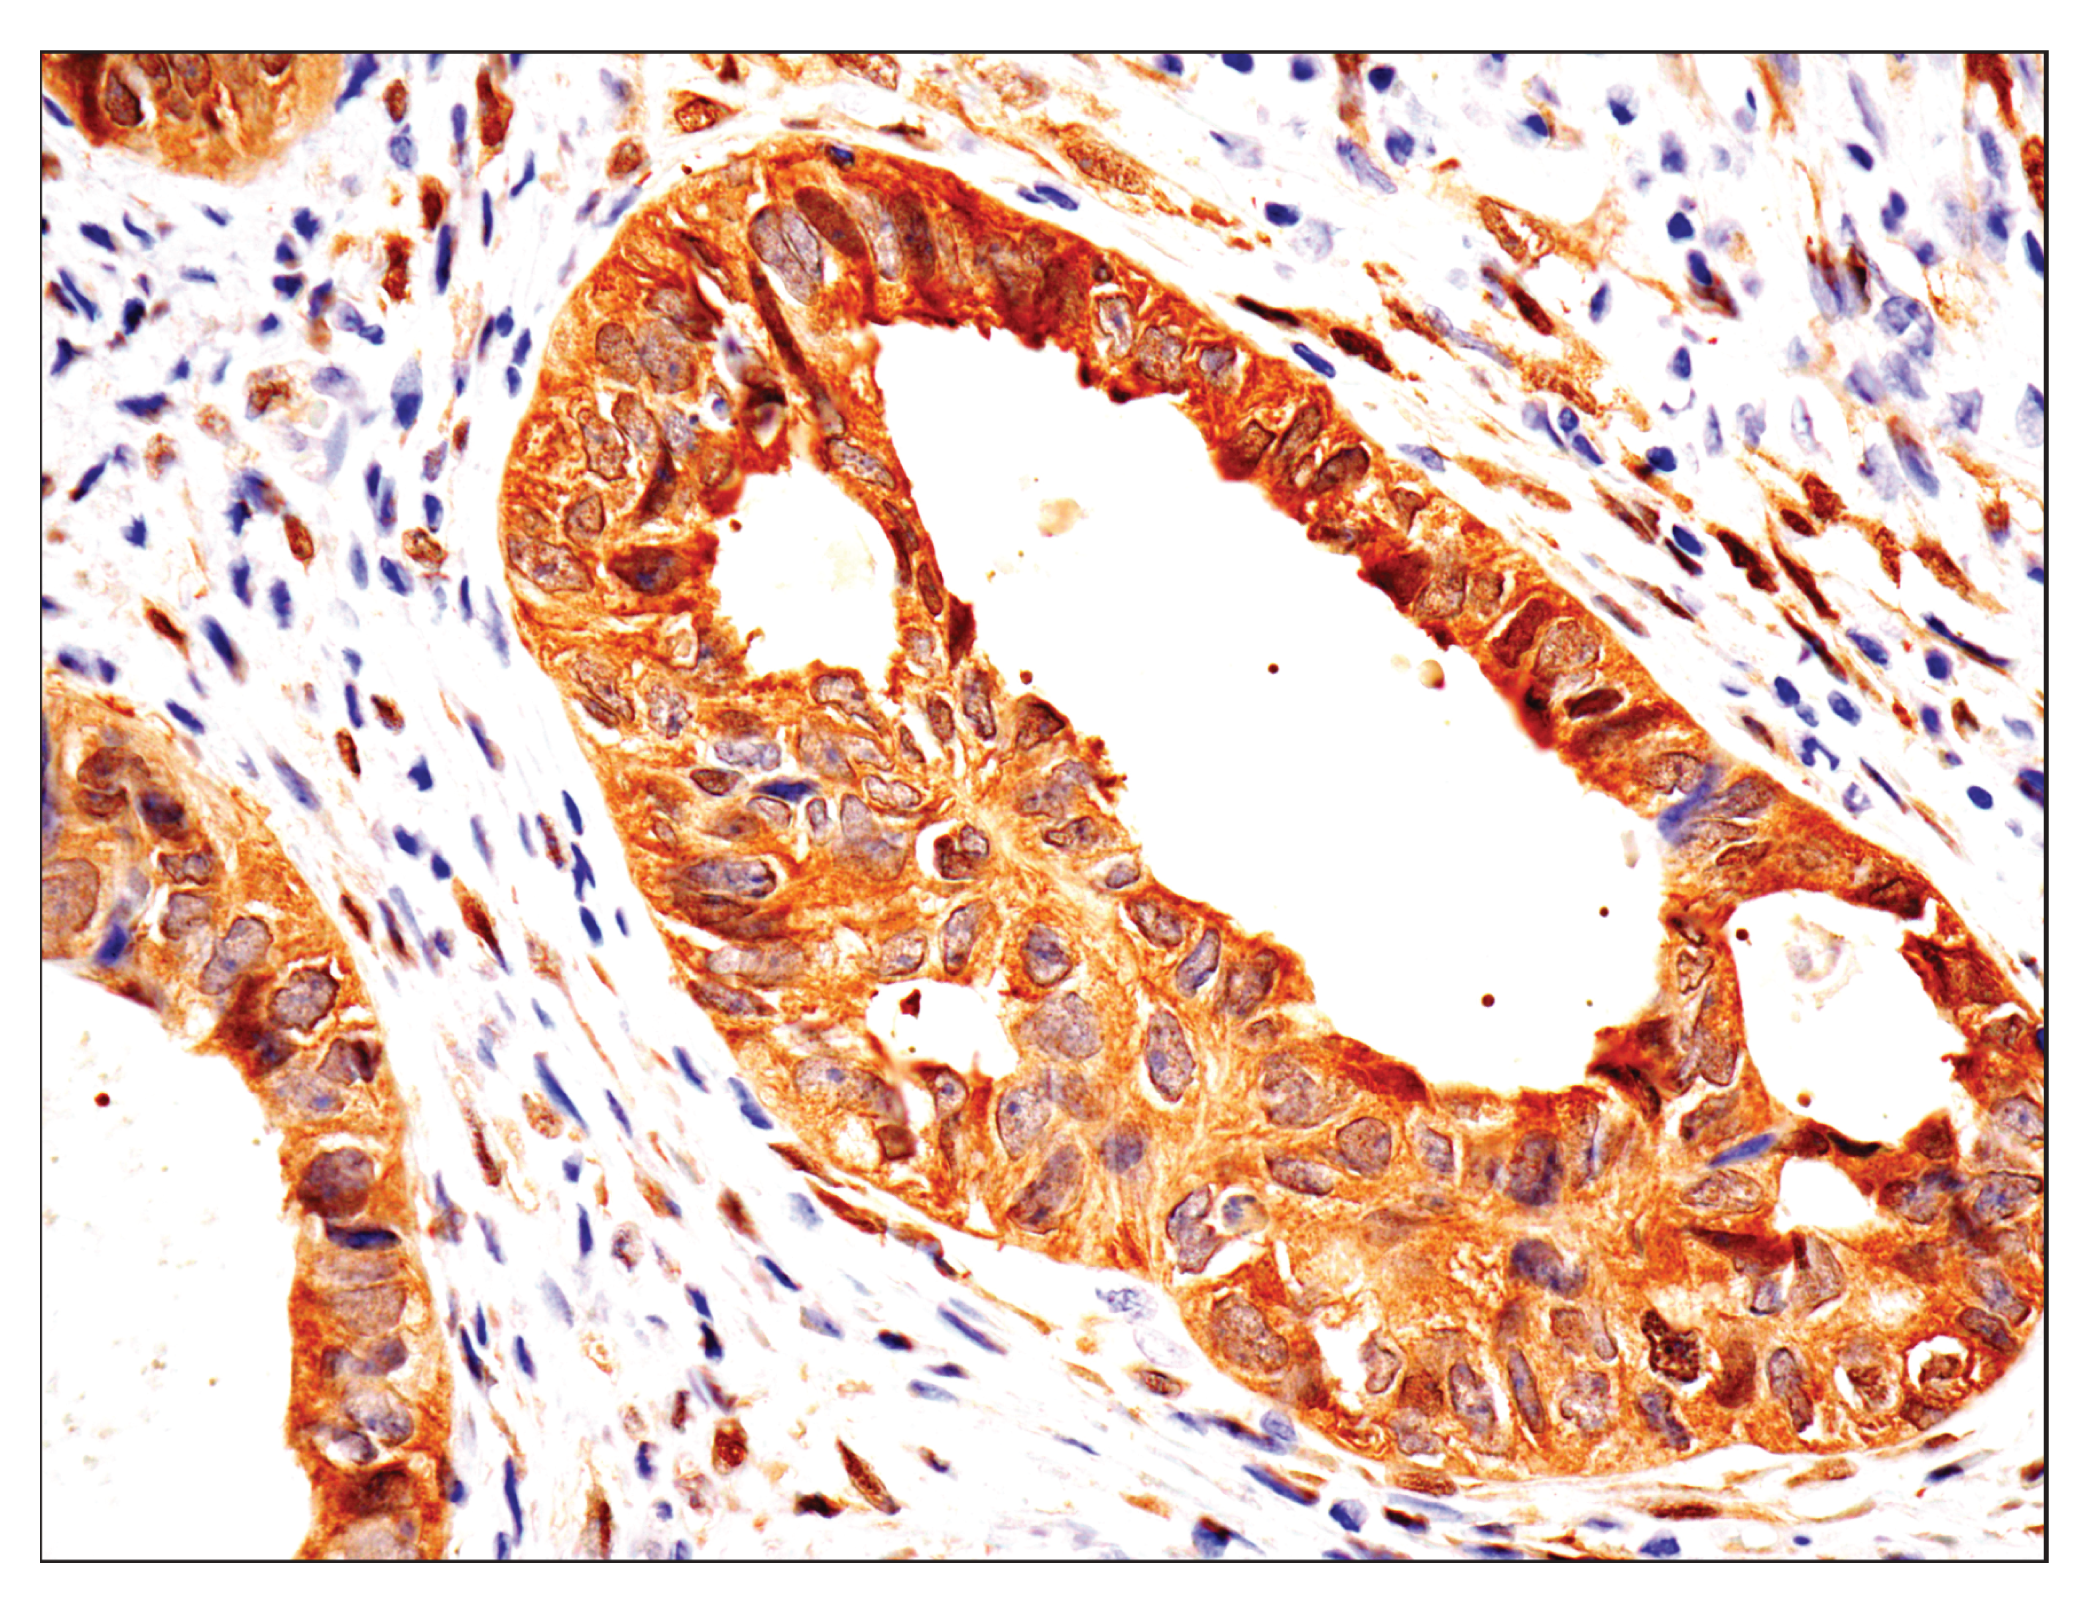  Image 46: Small Cell Lung Cancer Biomarker Antibody Sampler Kit